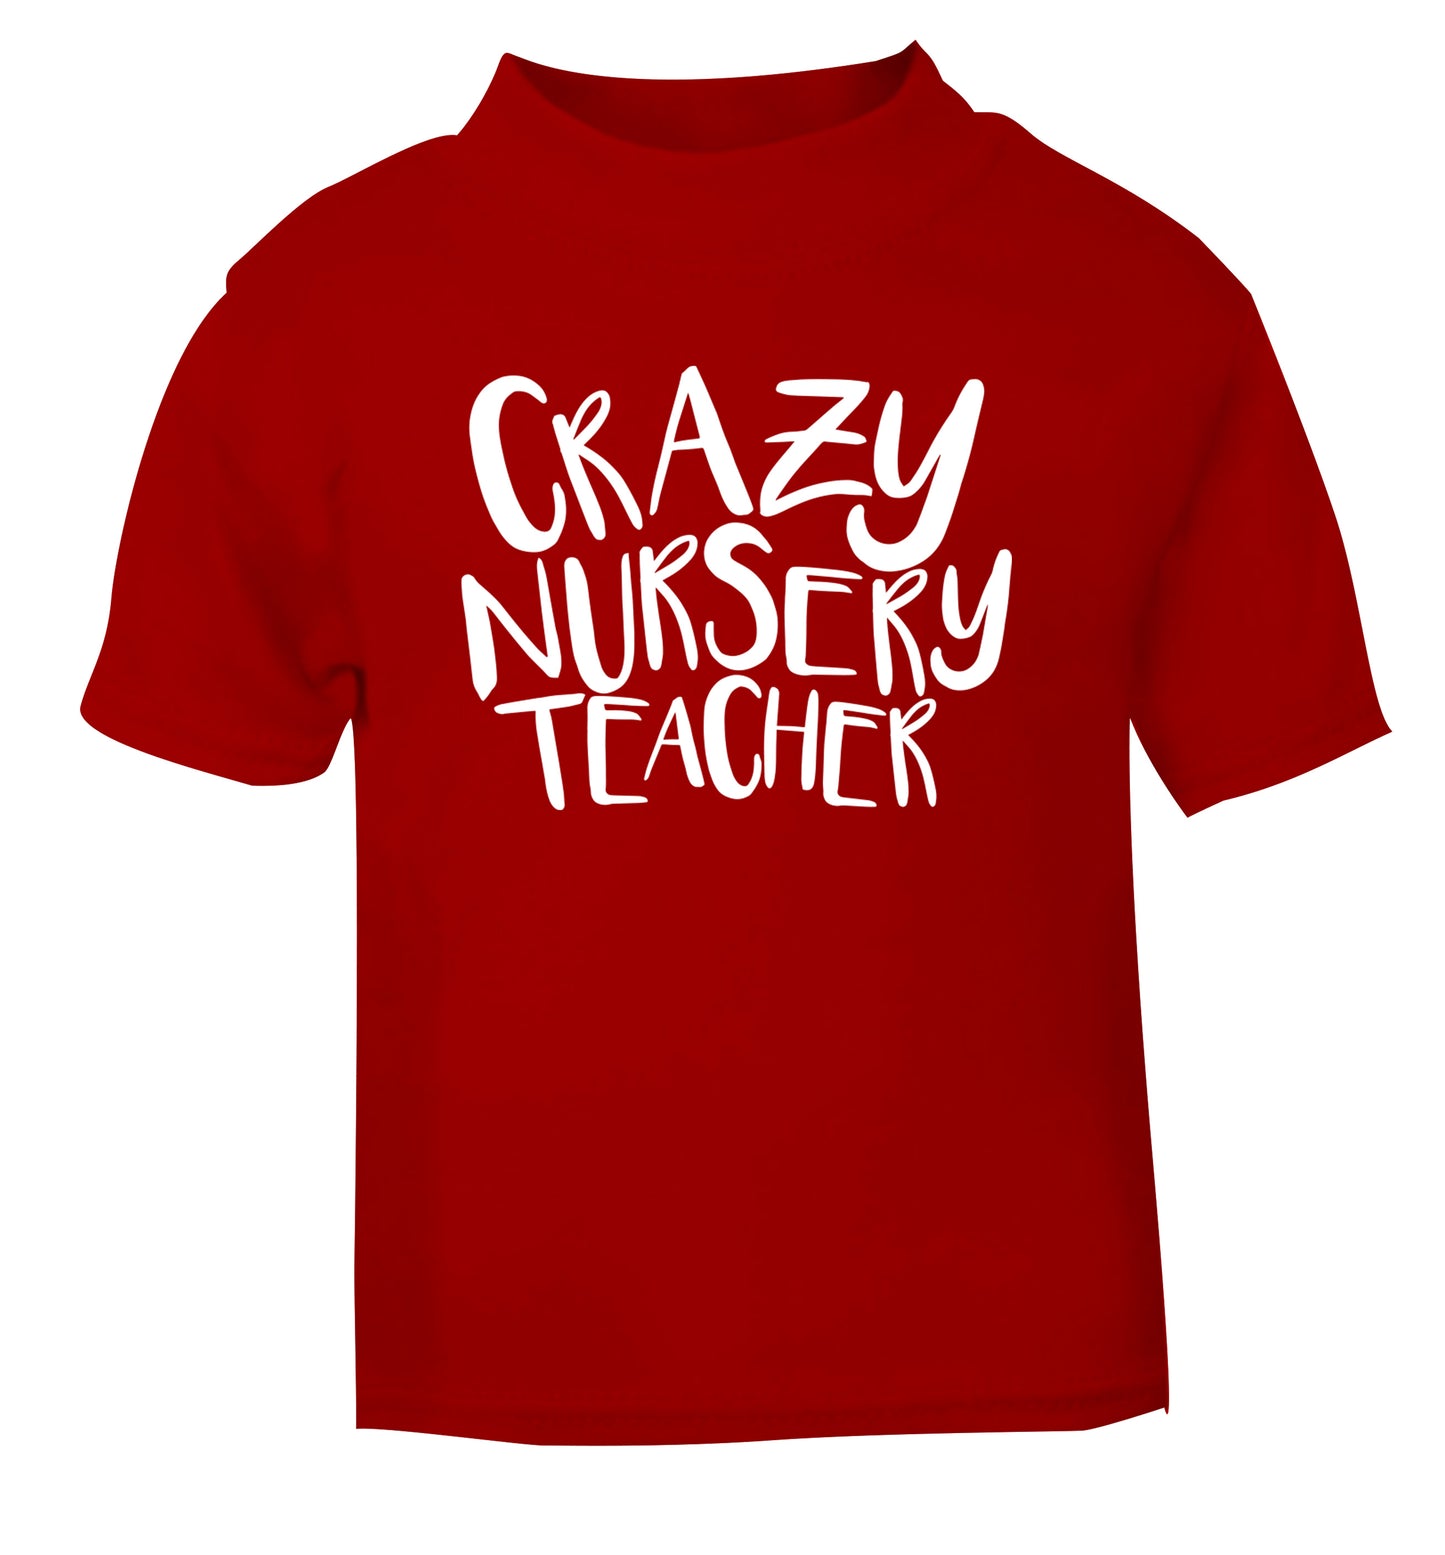 Crazy nursery teacher red Baby Toddler Tshirt 2 Years